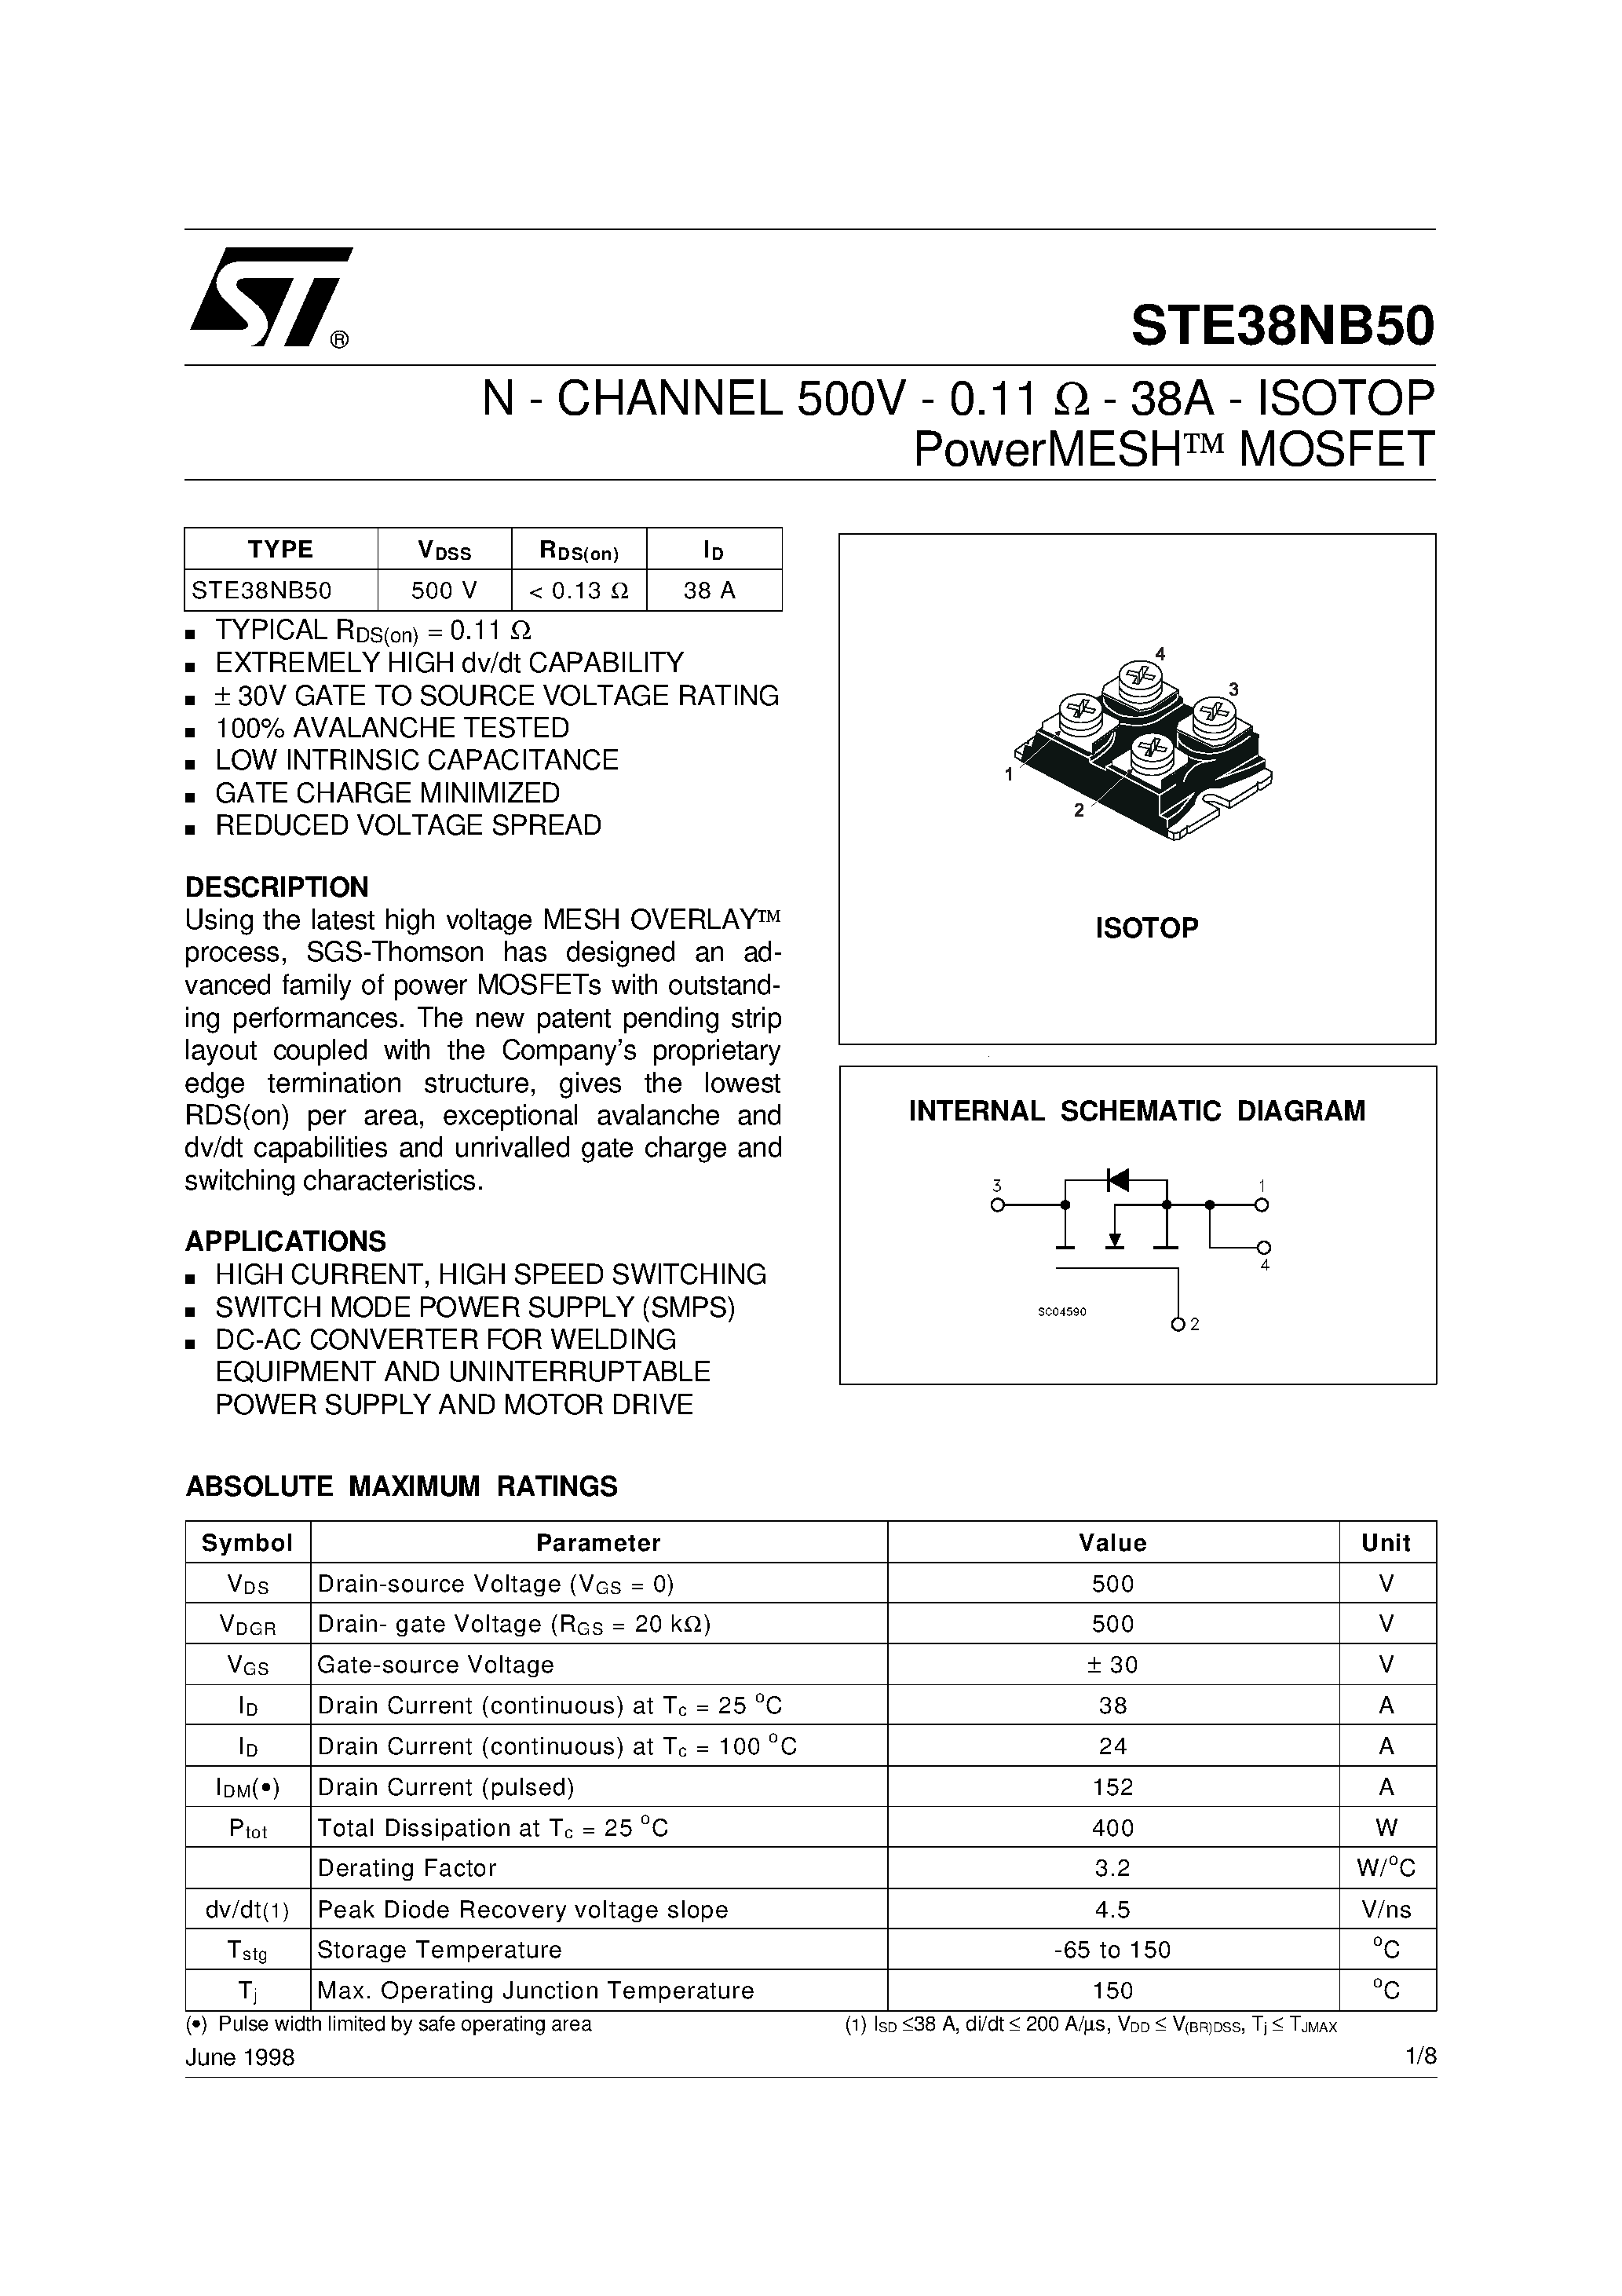 Datasheet STE38NB50 - N - CHANNEL PowerMESH MOSFET page 1